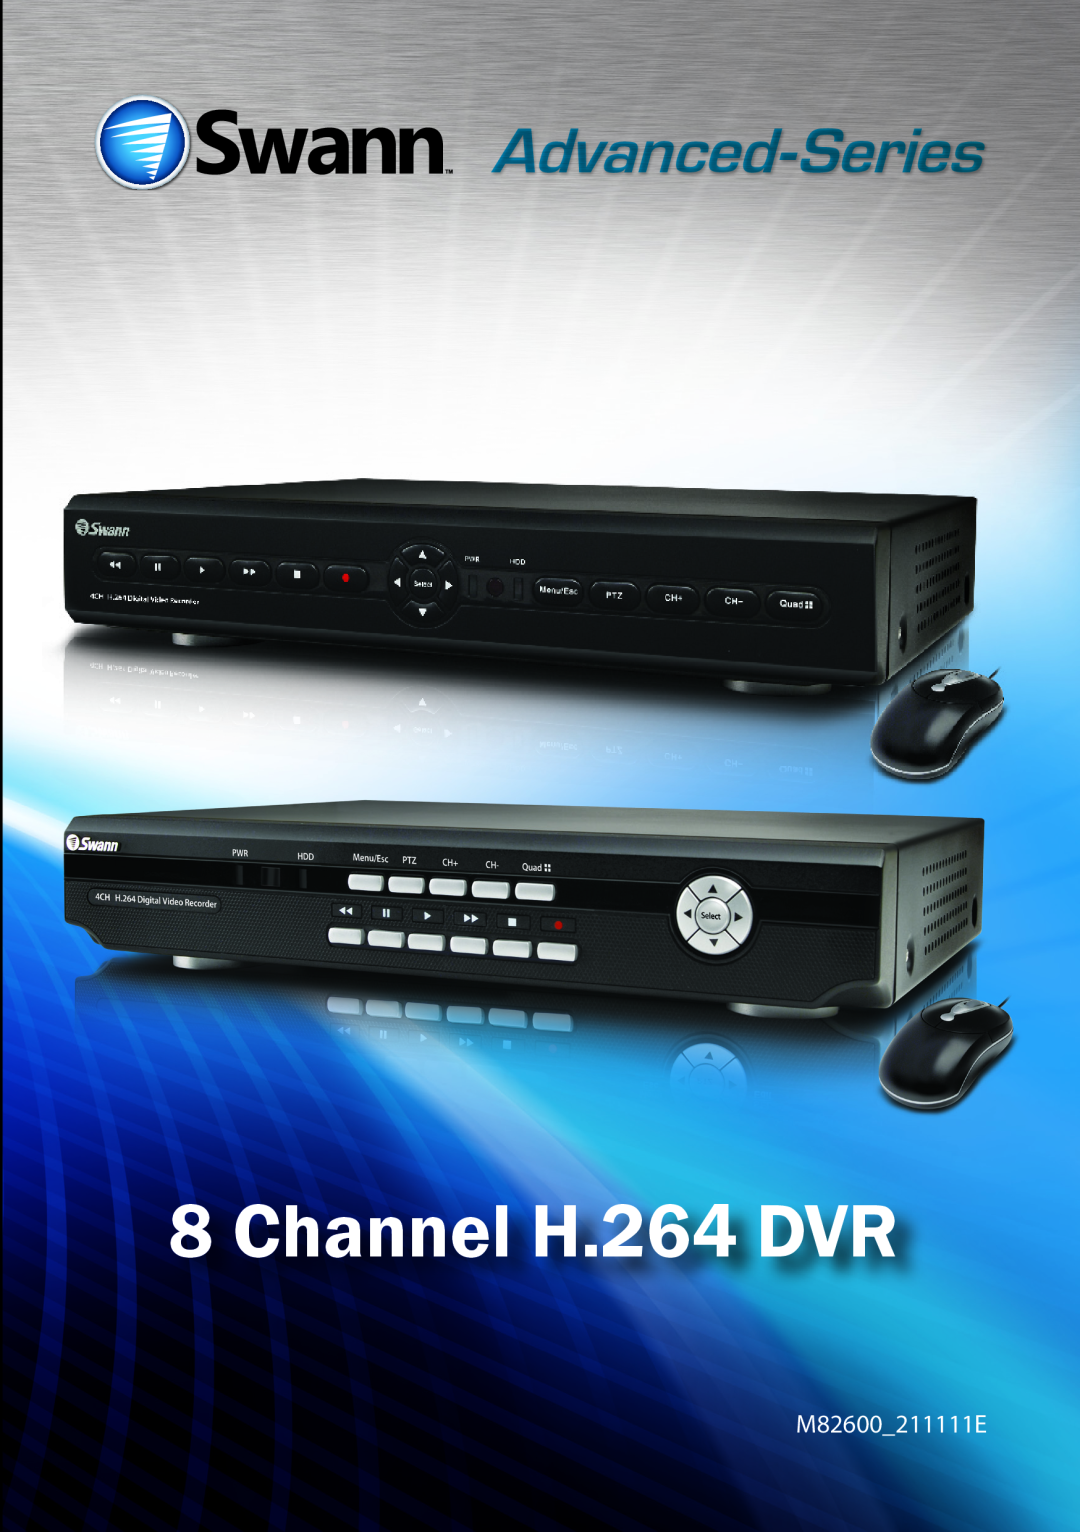 Swann manual M82600 211111E, Channel H.264 DVR, Advanced-Series 